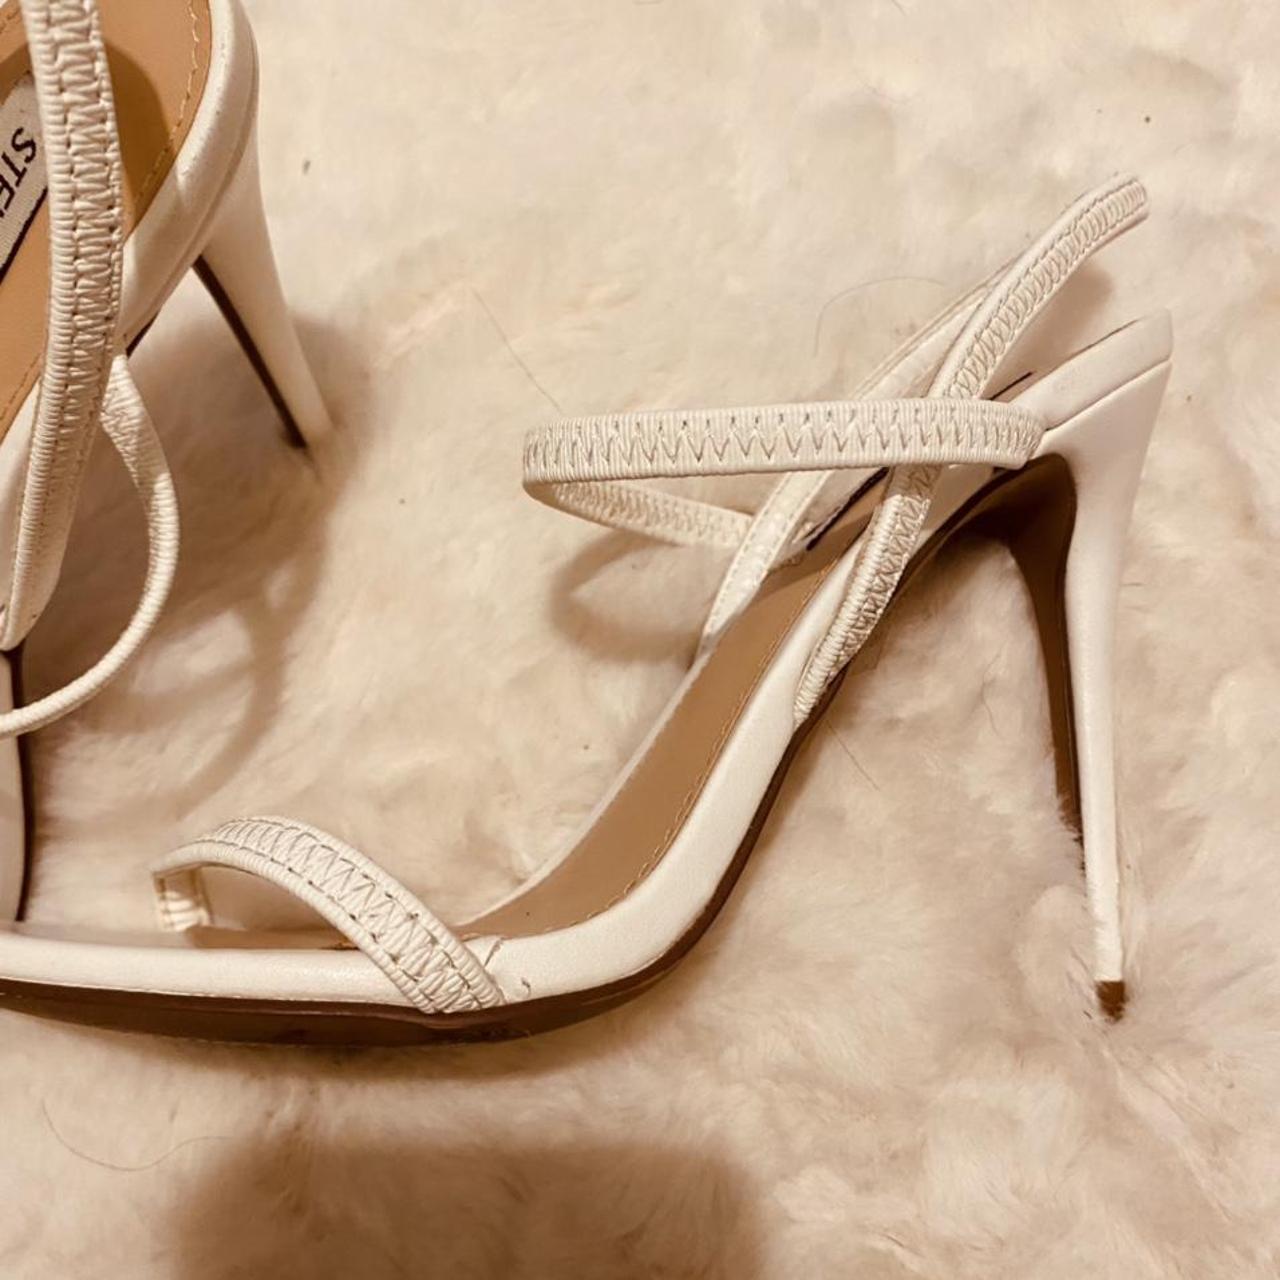 Product Image 2 - Steve Madden white stiletto heels
Great